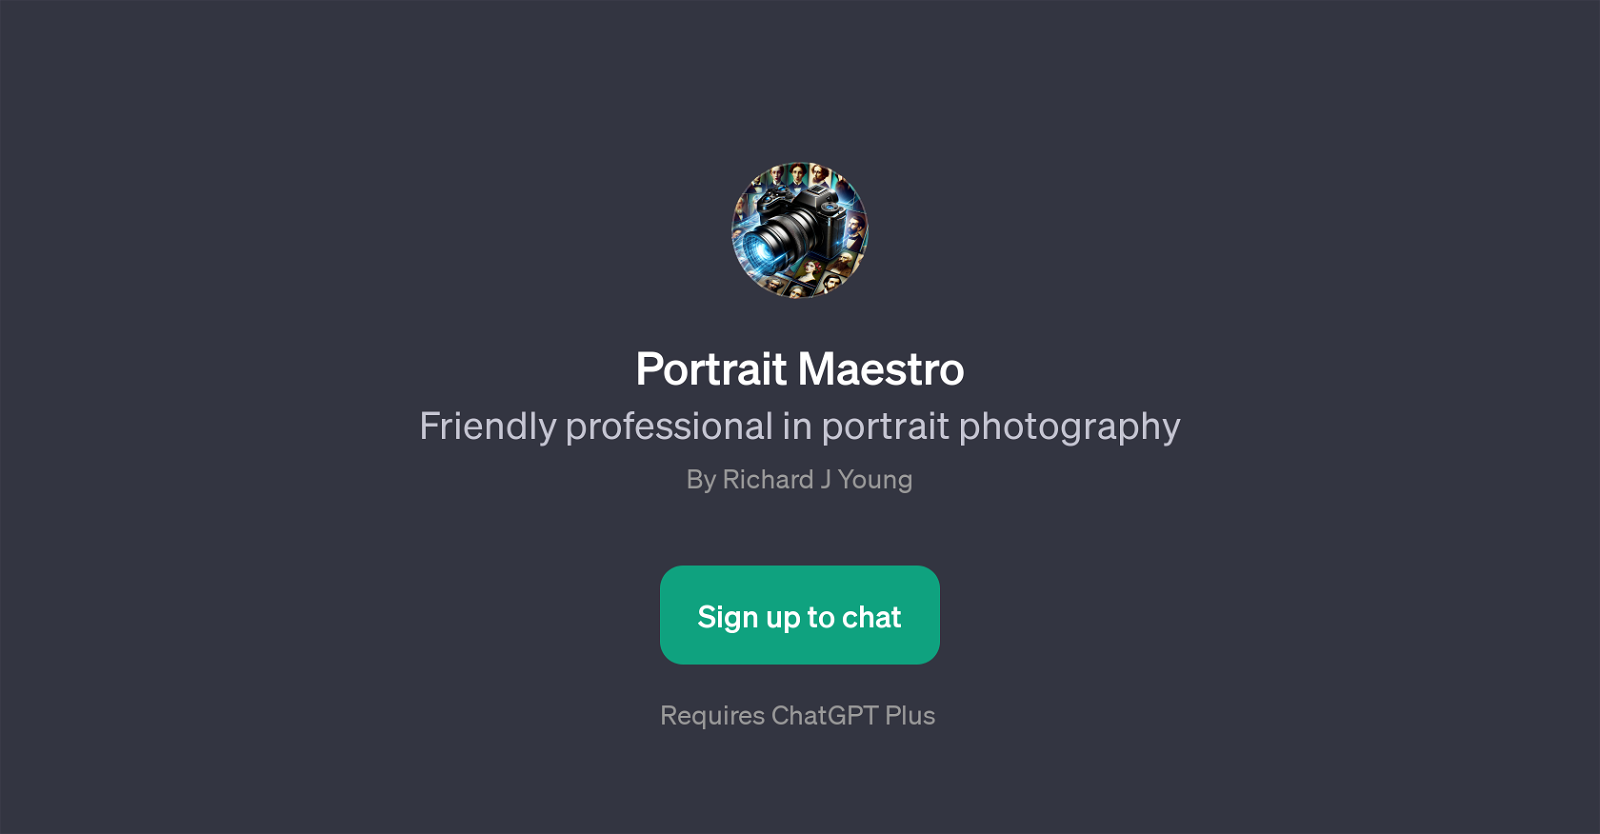 Portrait Maestro website